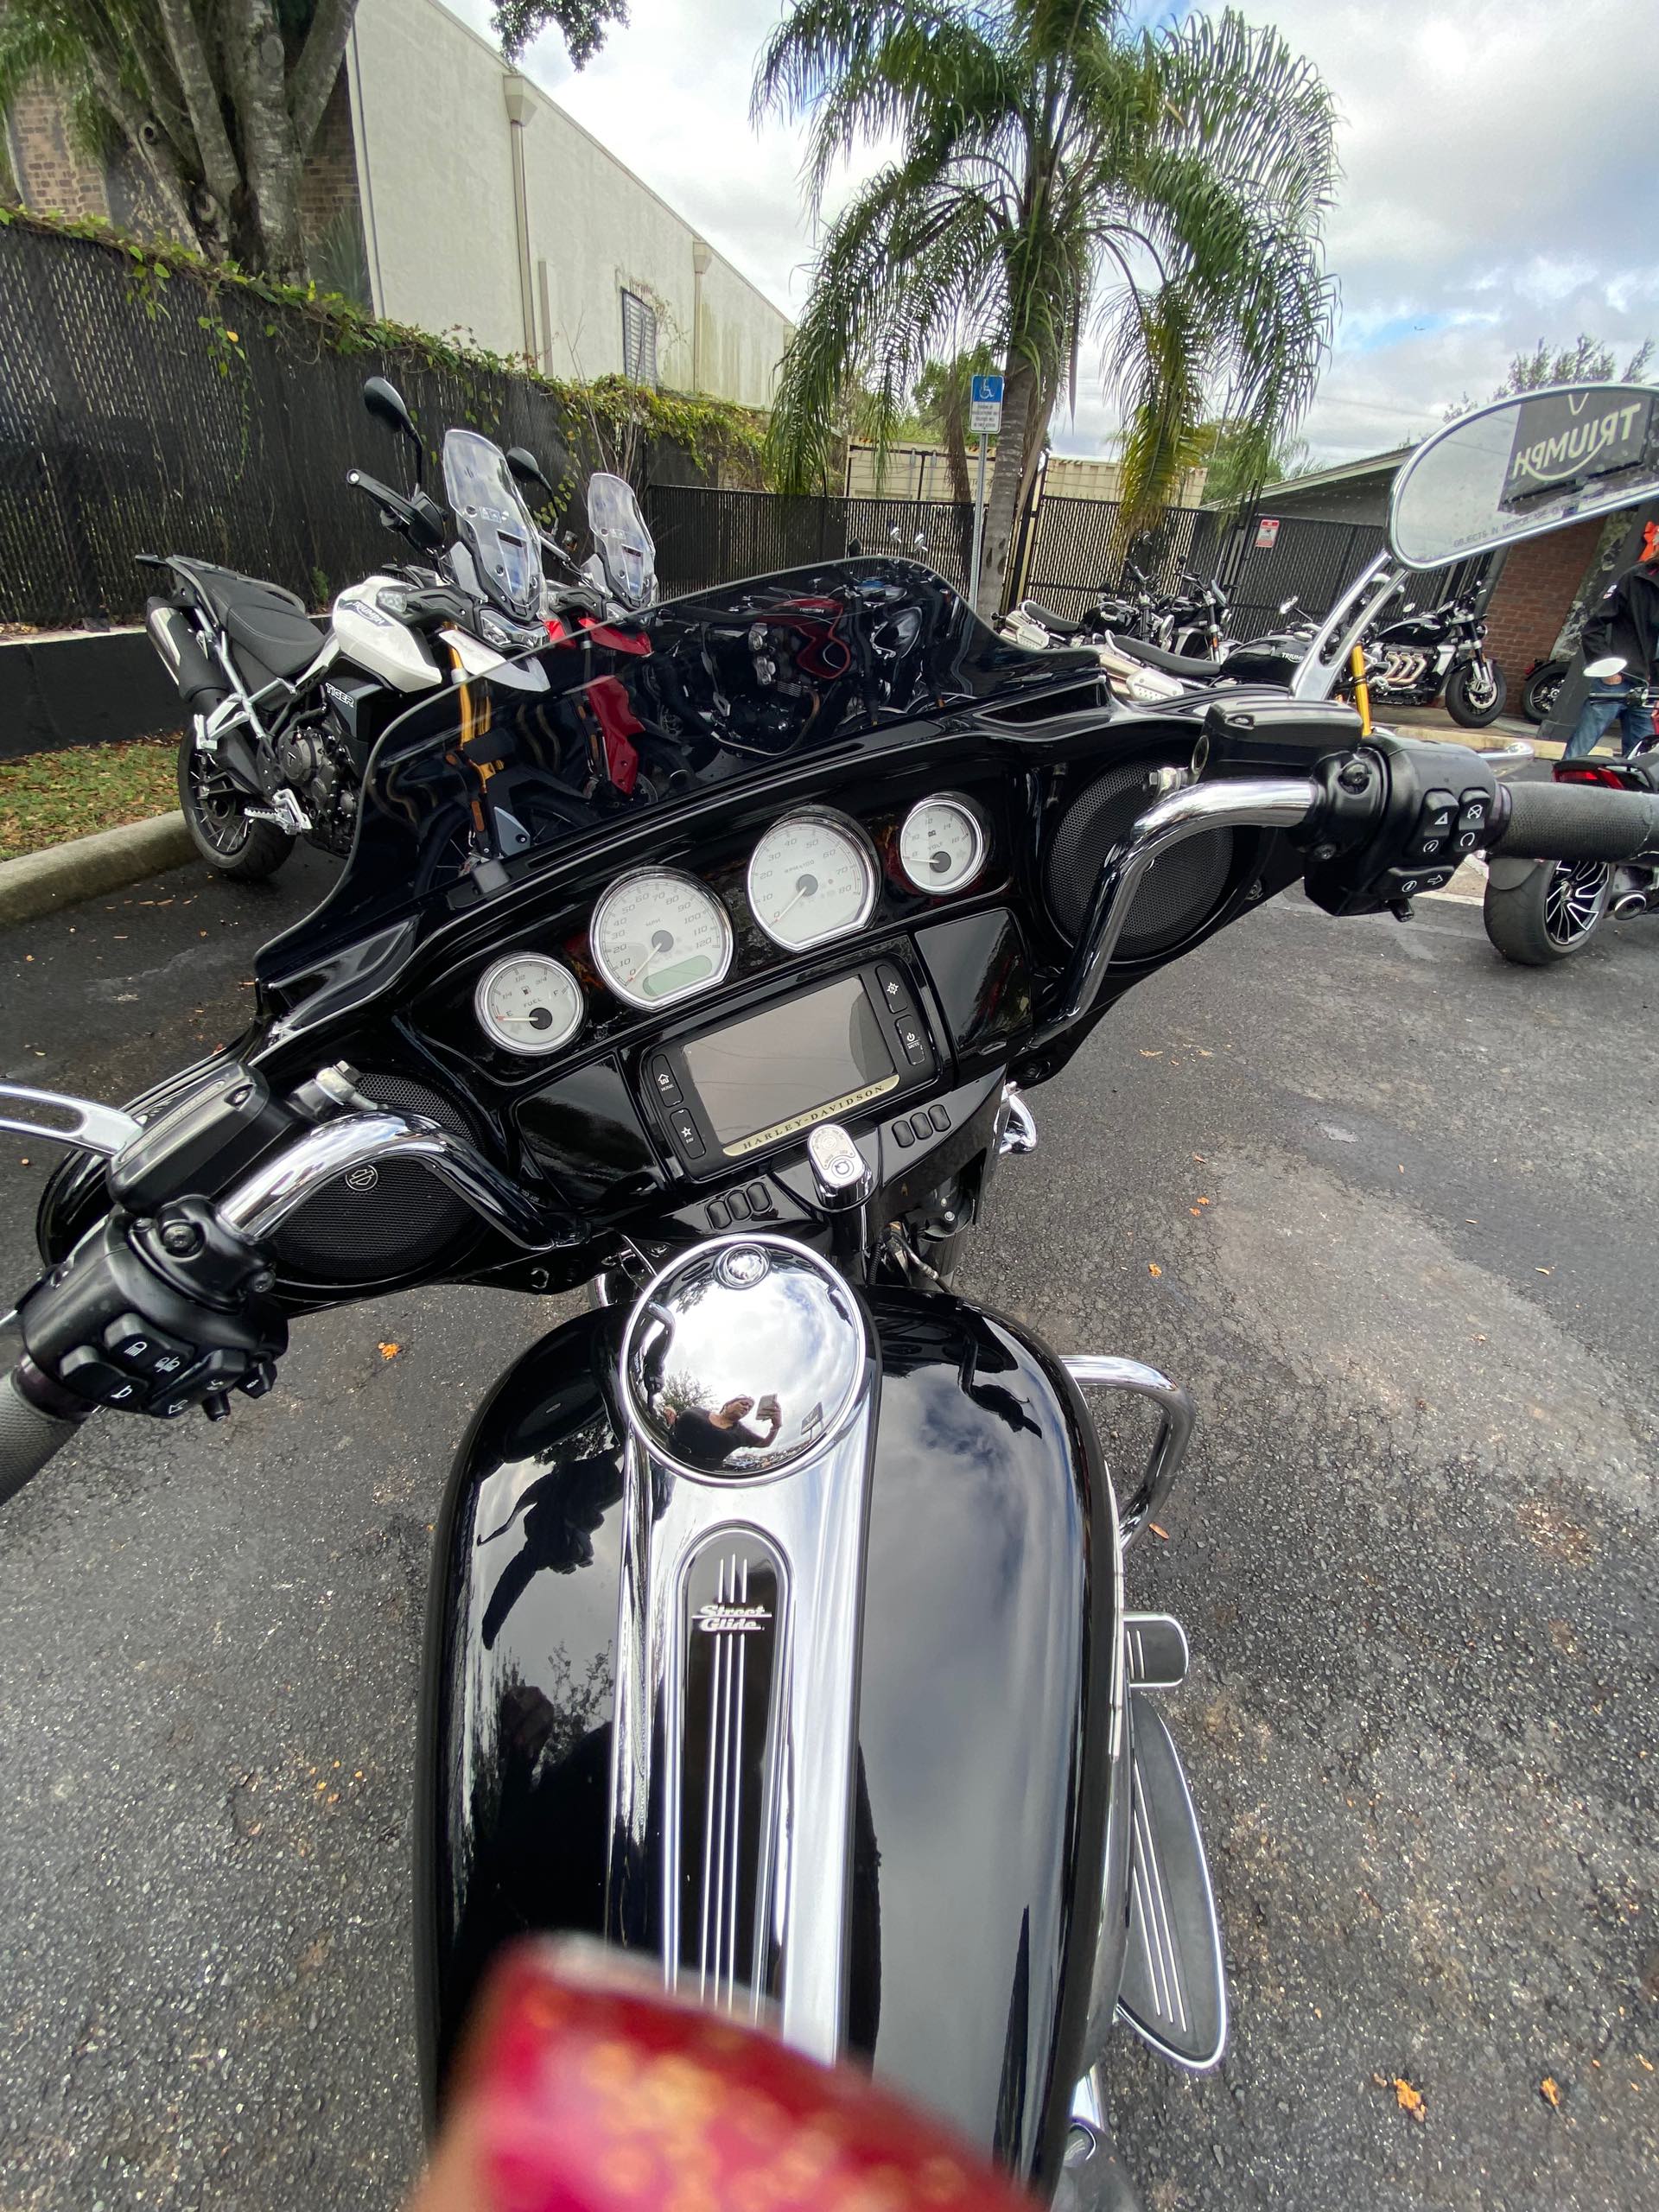 2017 Harley-Davidson Street Glide Special at Tampa Triumph, Tampa, FL 33614